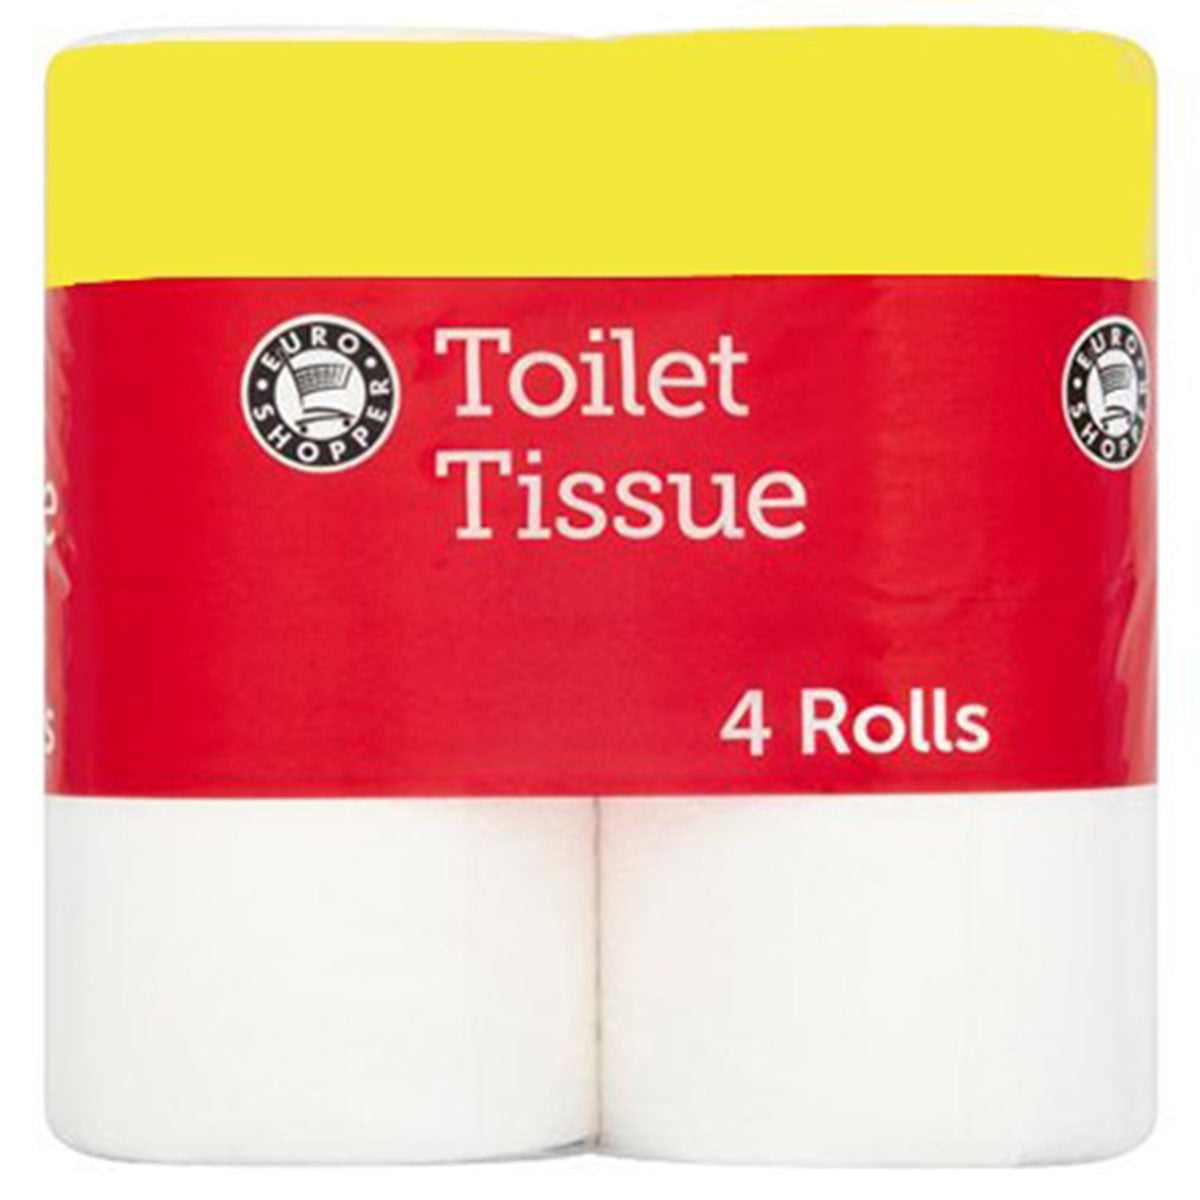 Euro Shopper - Toilet Tissue - 4 Rolls - Continental Food Store